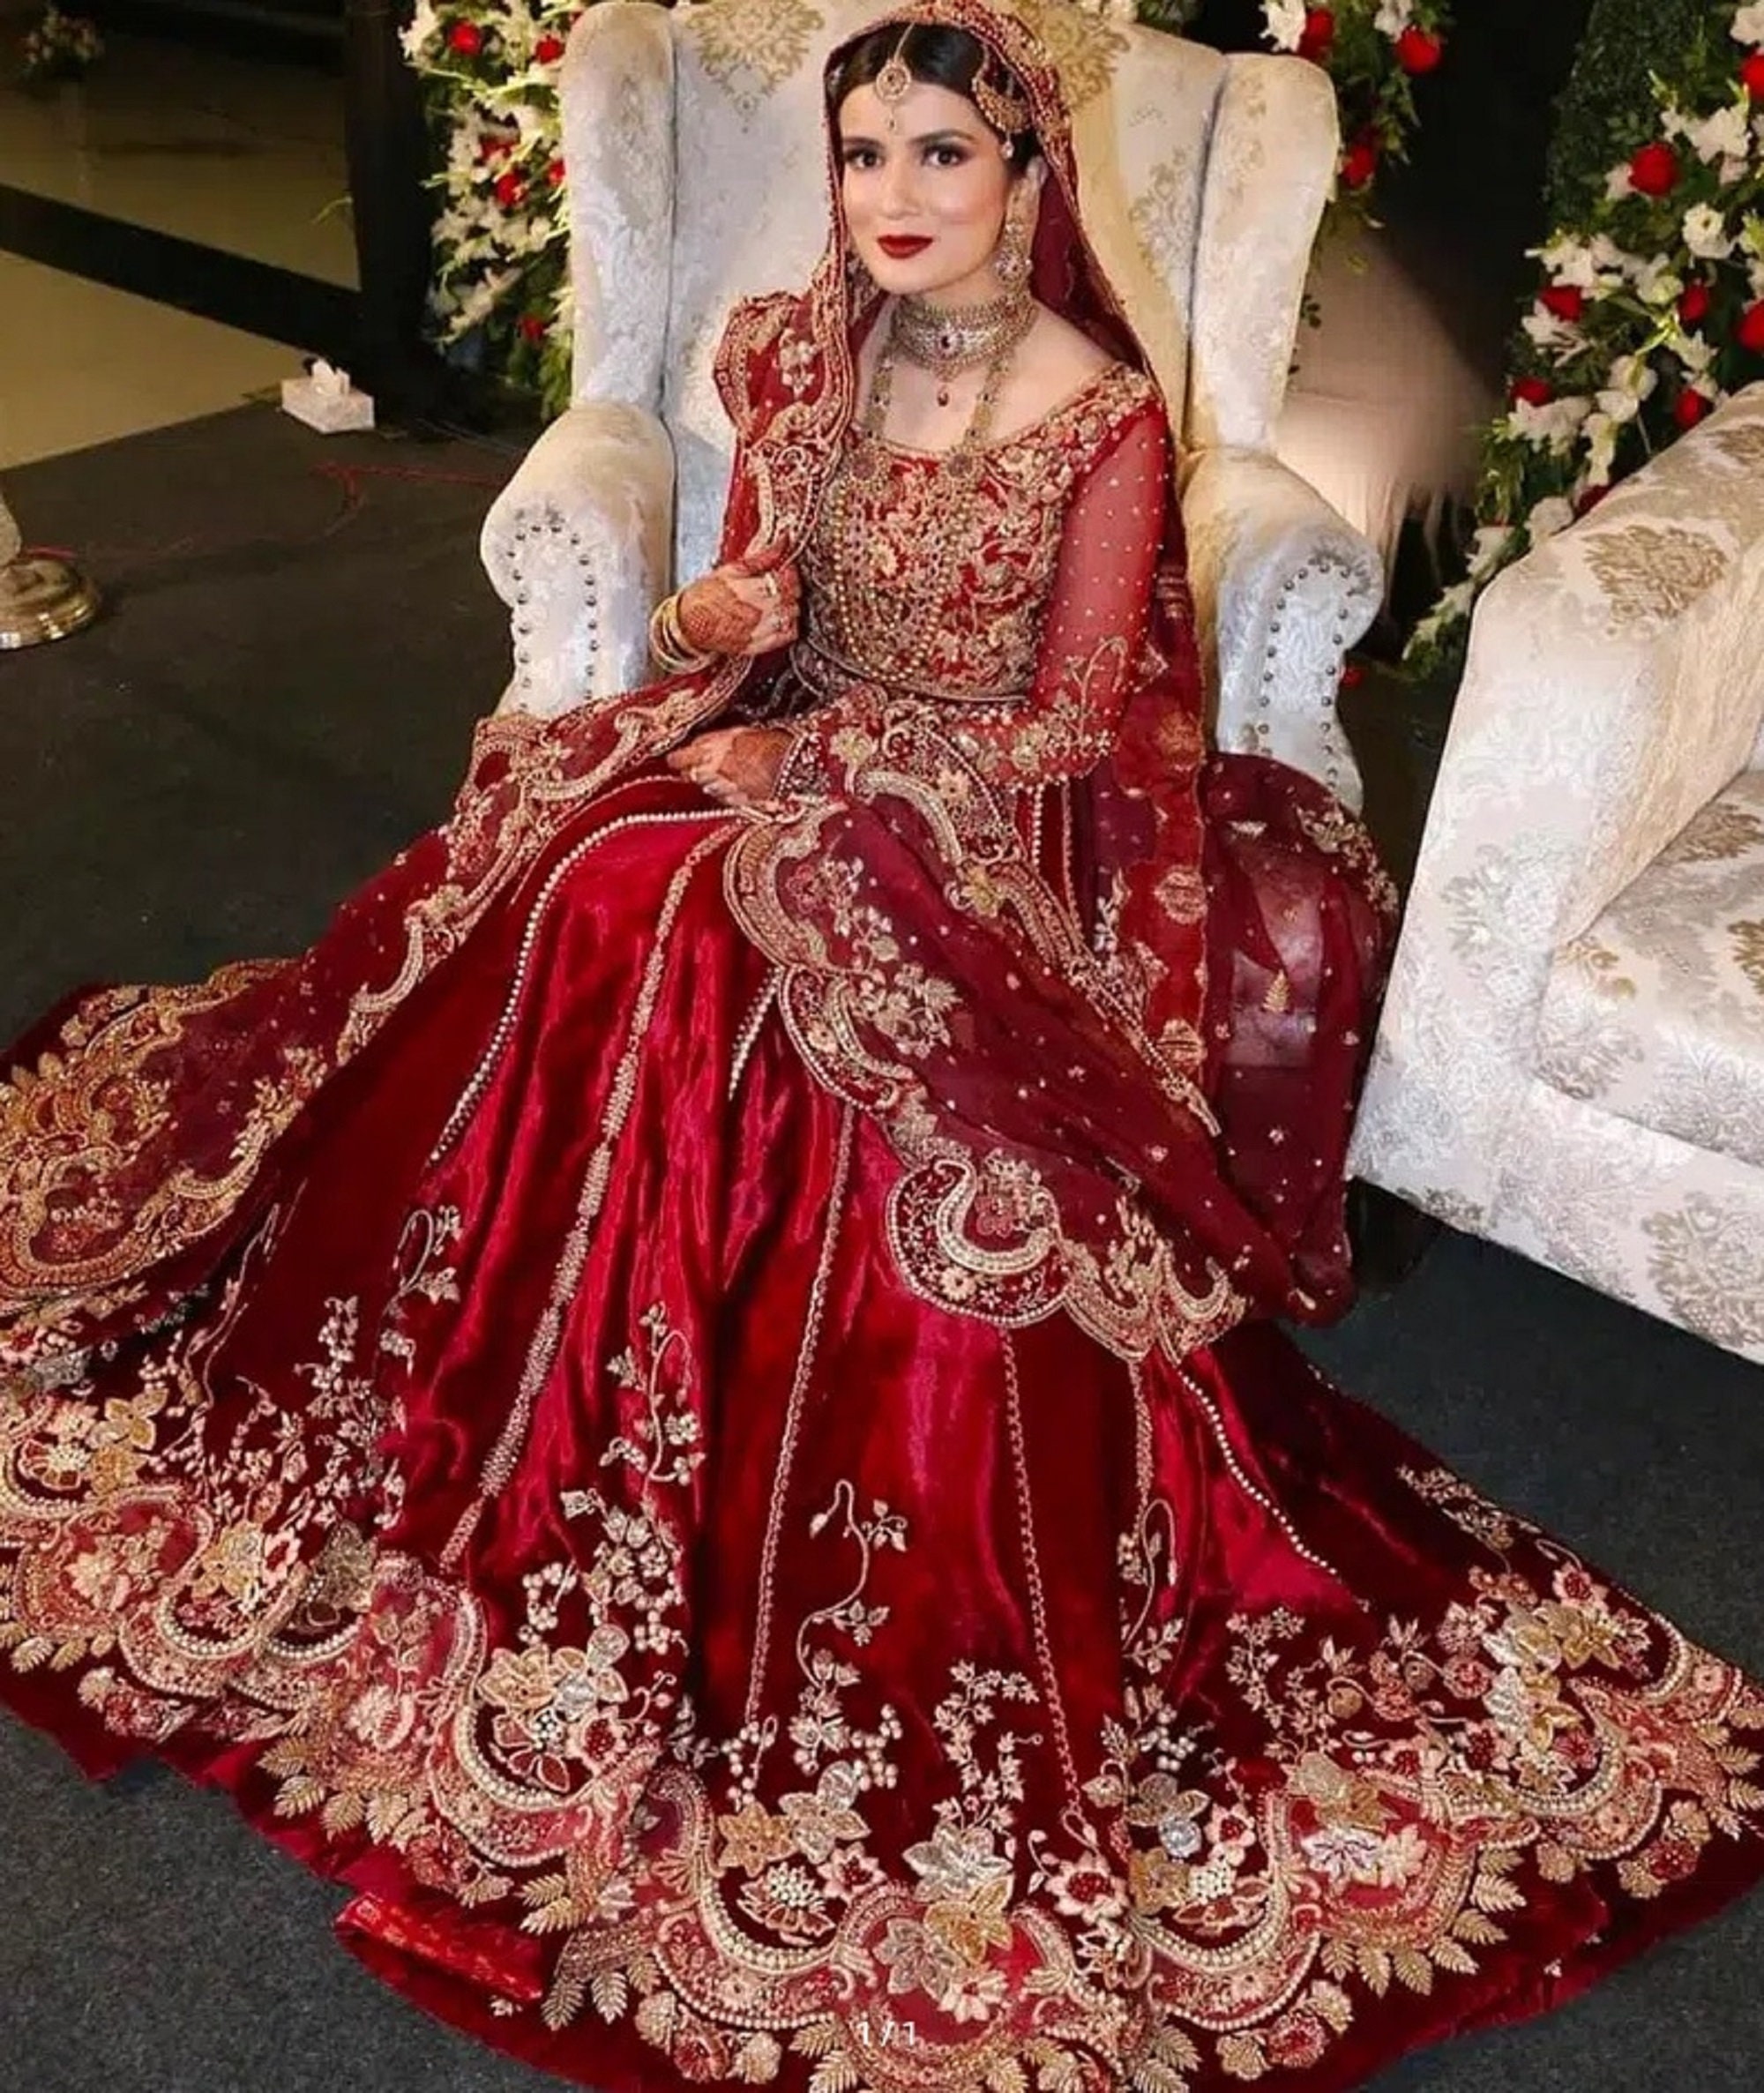 asian wedding dresses